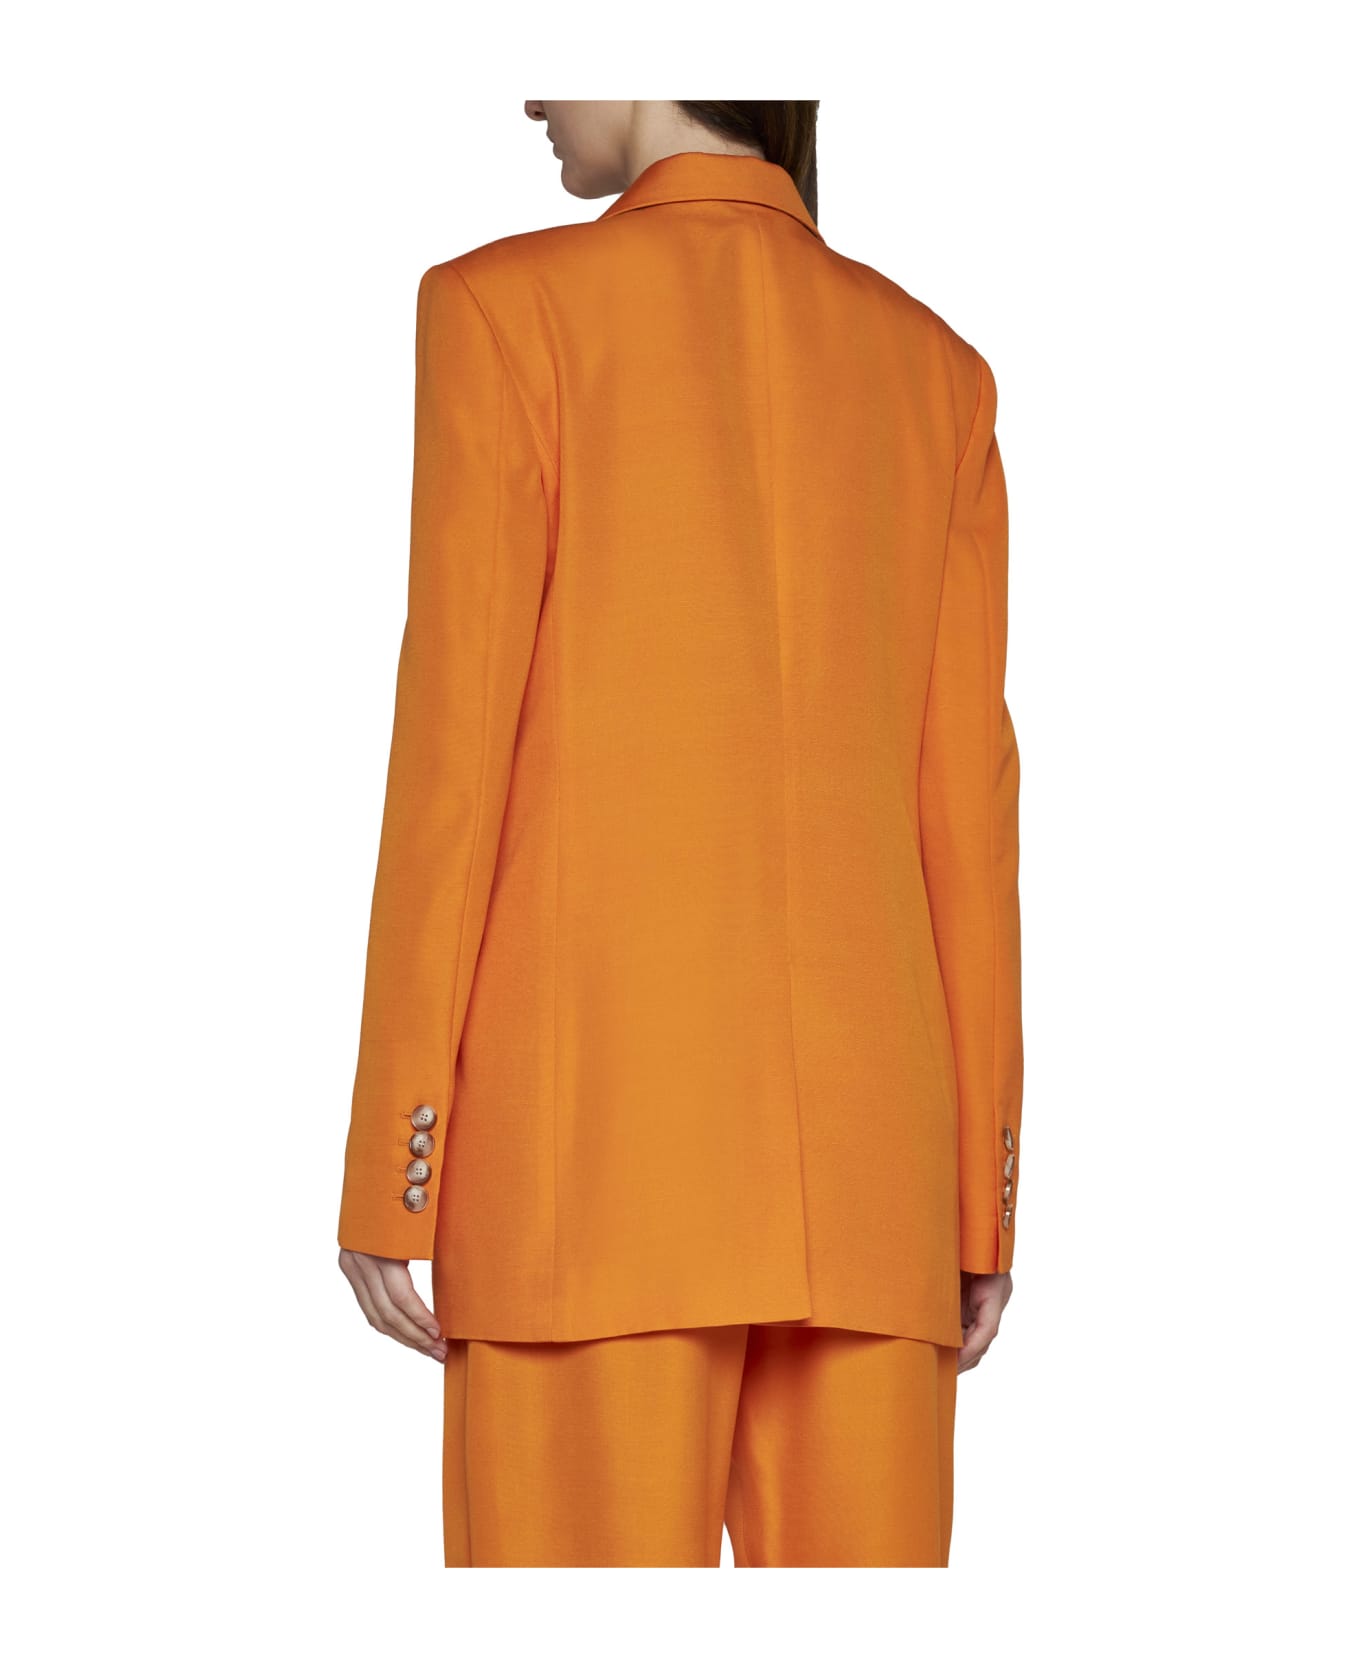 Stella McCartney Blazer - Bright orange